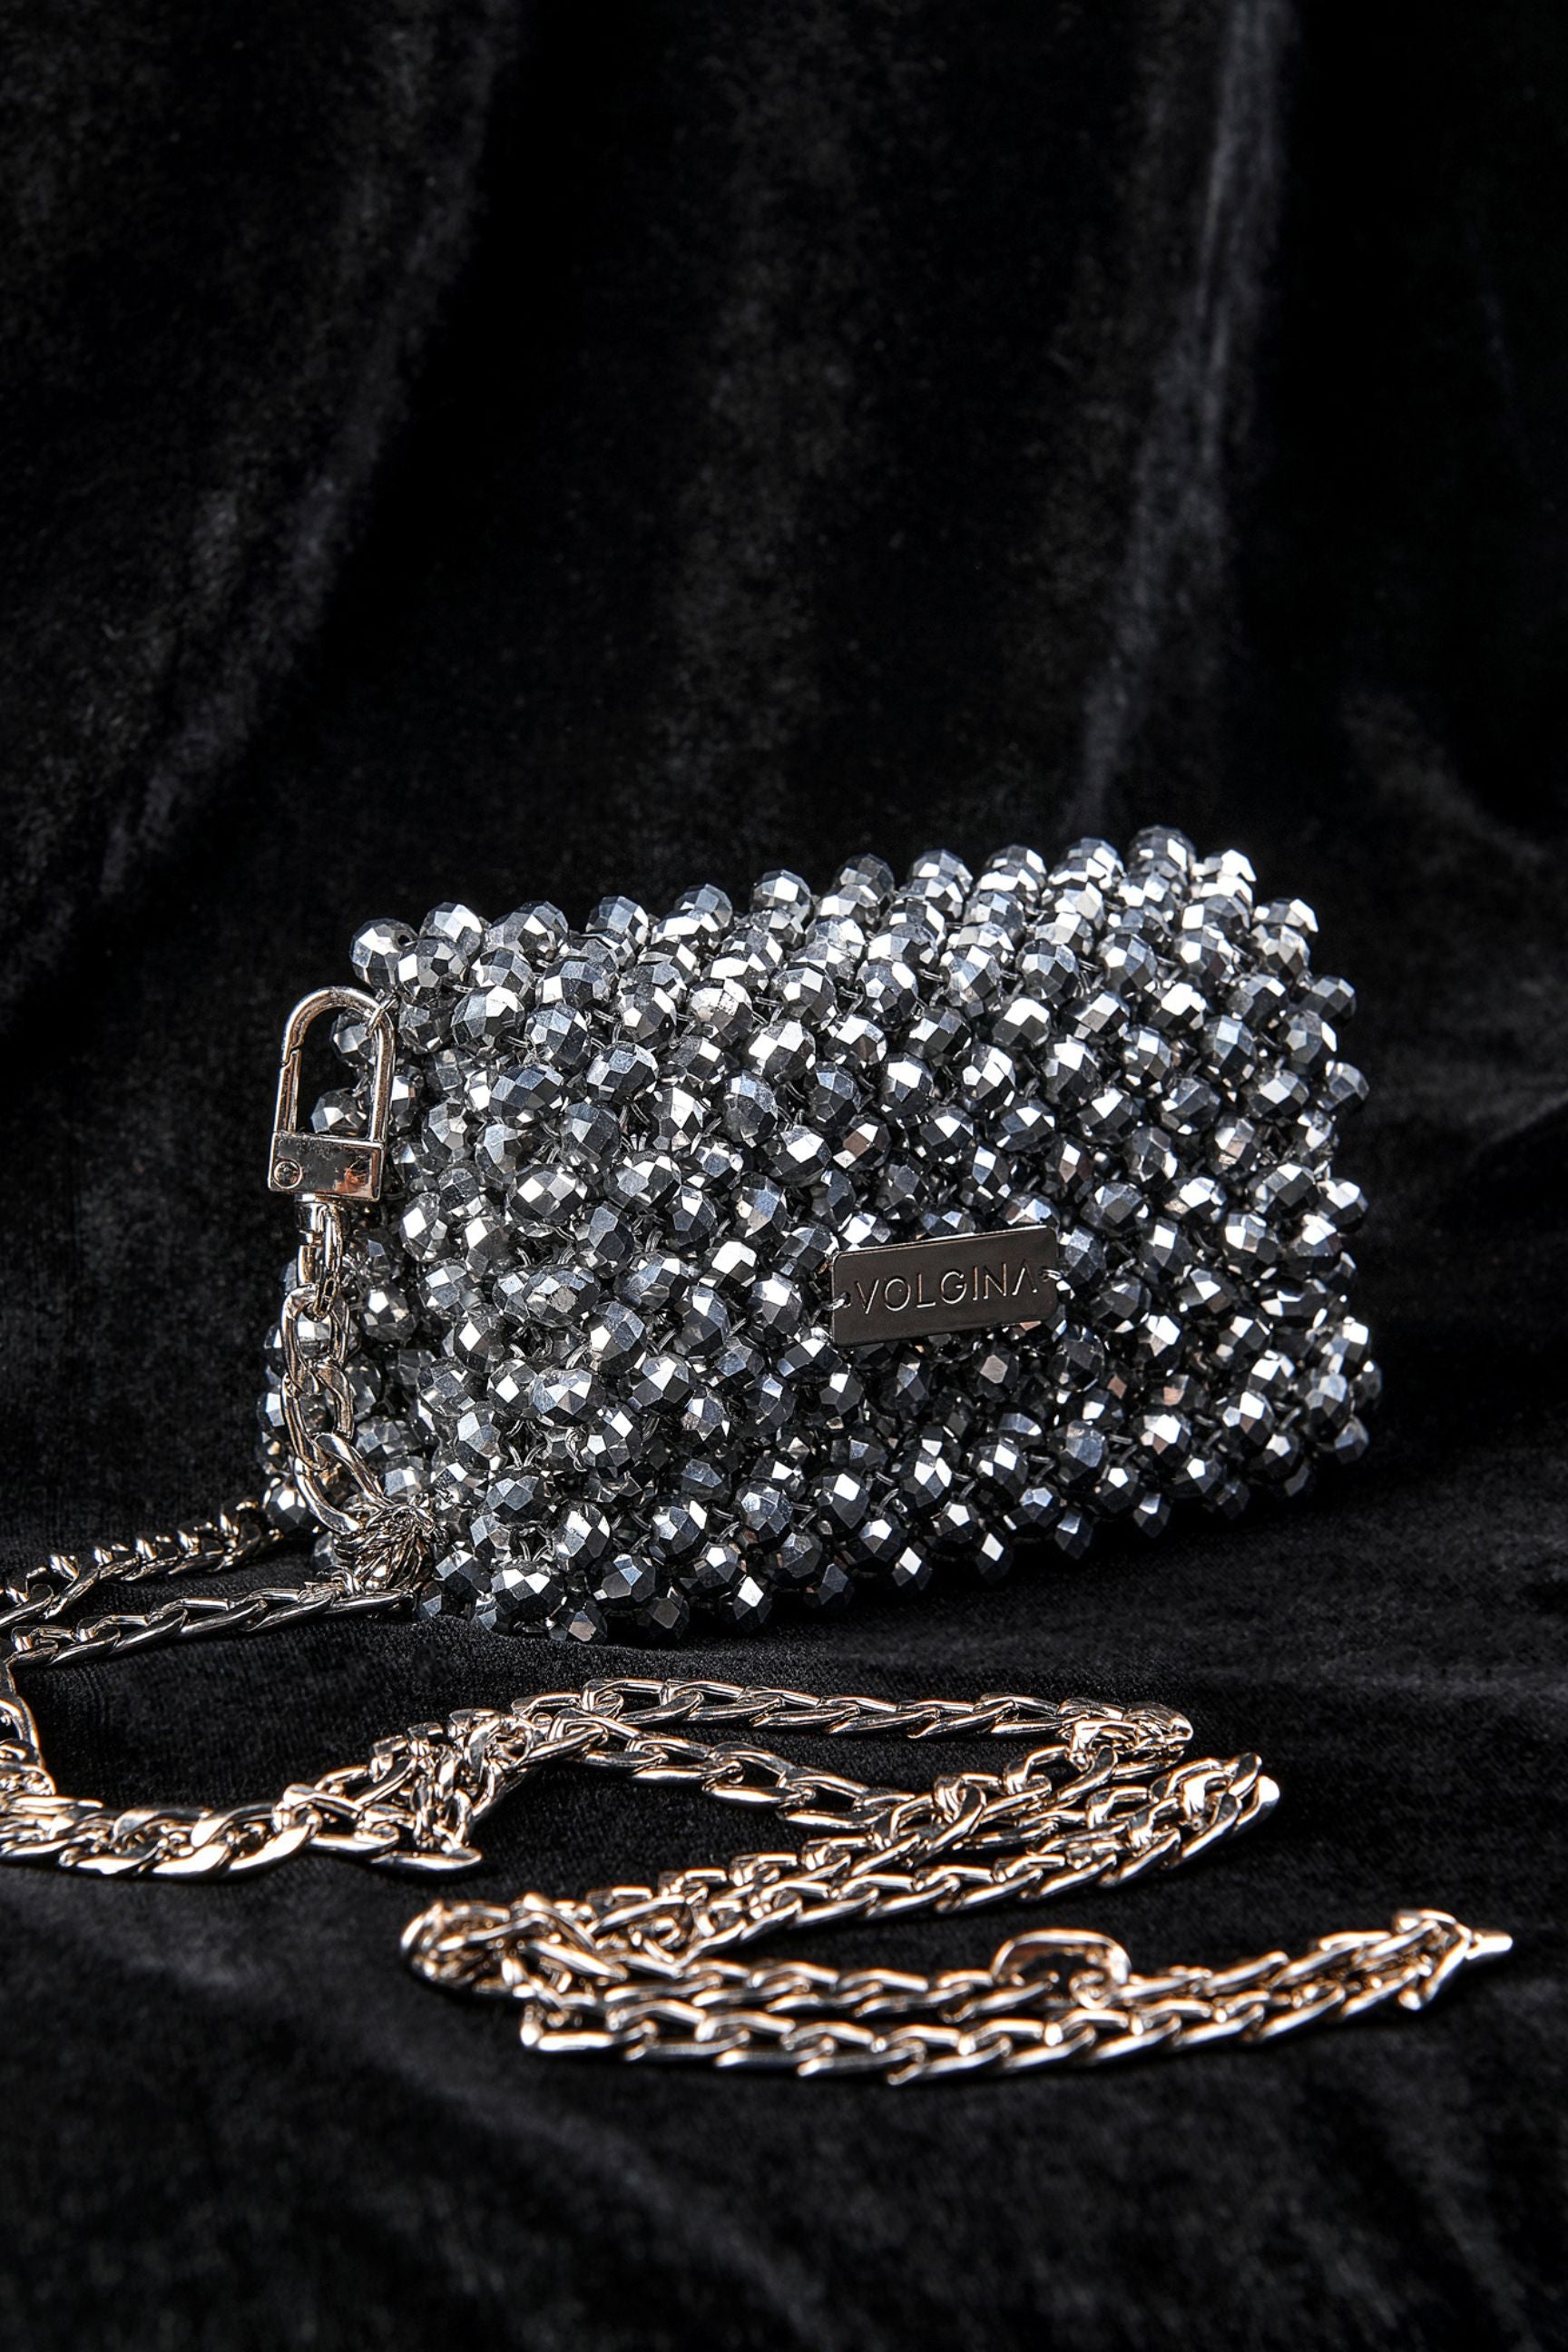 Handmade Silver Clutch Bag with Swarovski Crystal Beads